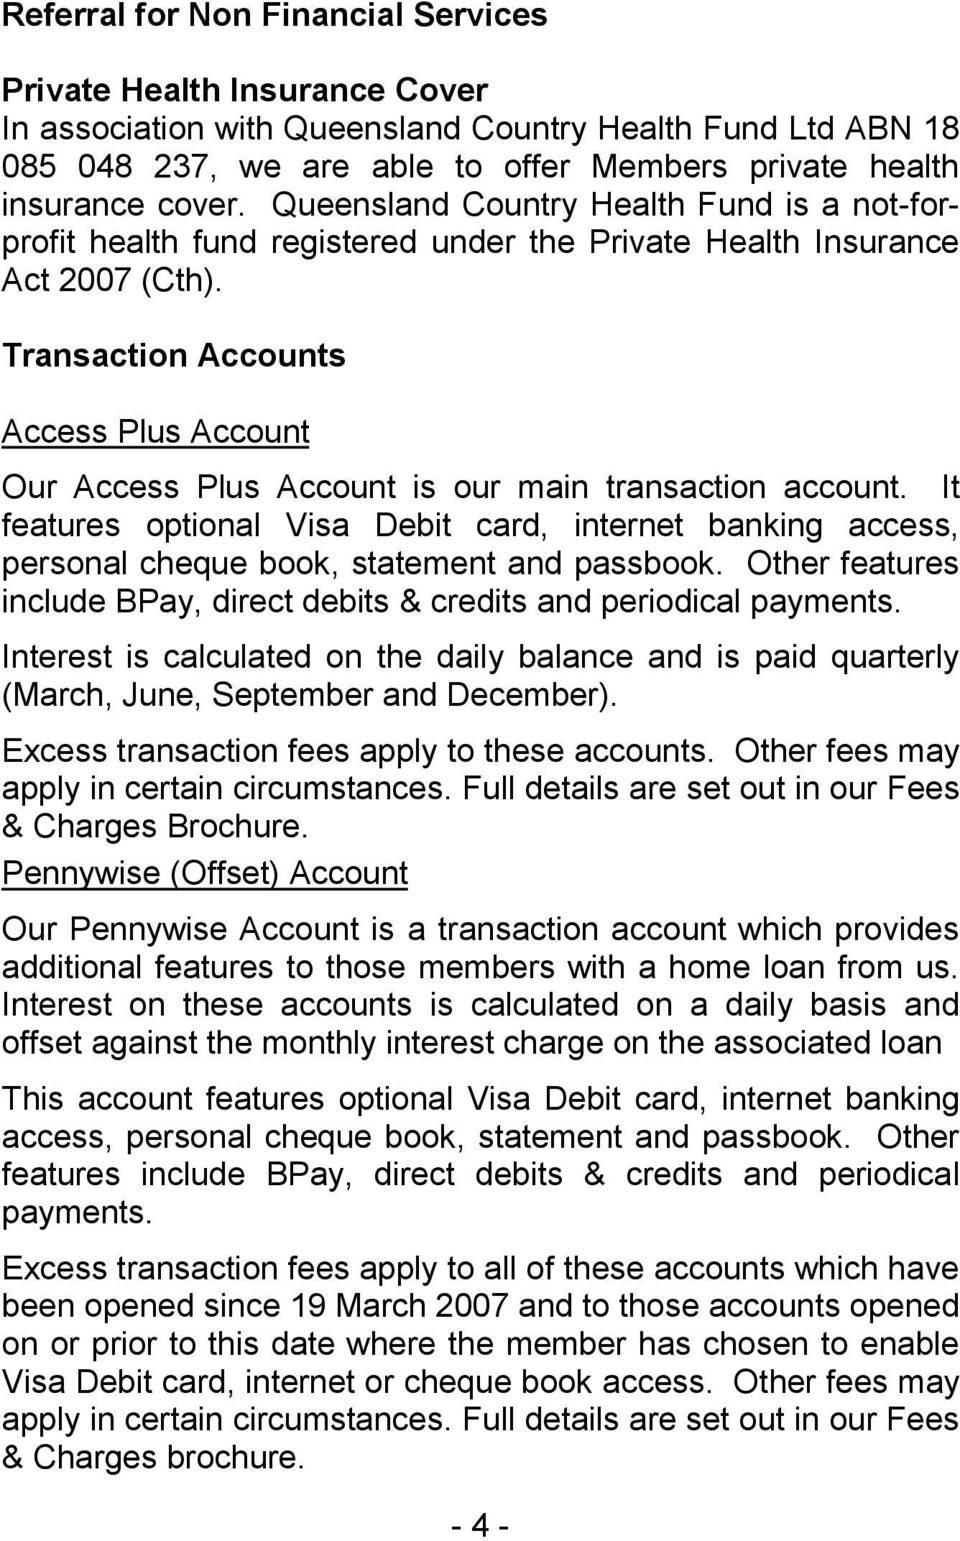 Transaction Accounts Access Plus Account Our Access Plus Account is our main transaction account.